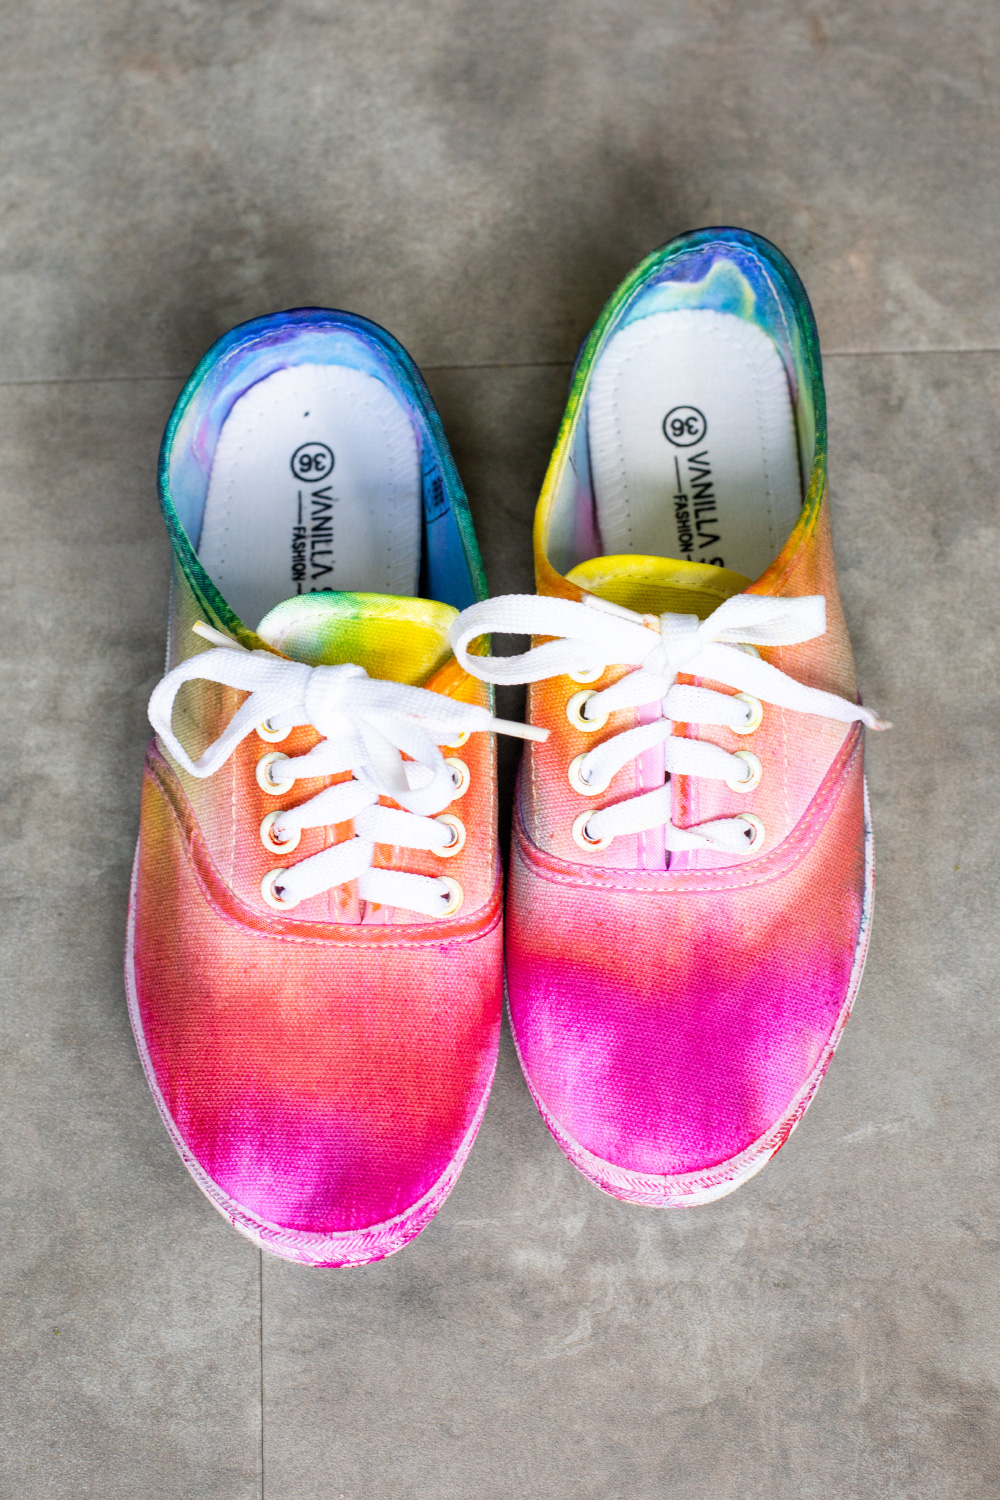 Regenbogen-Schuhe mit der Batik-Technik / Tie Dye DIY